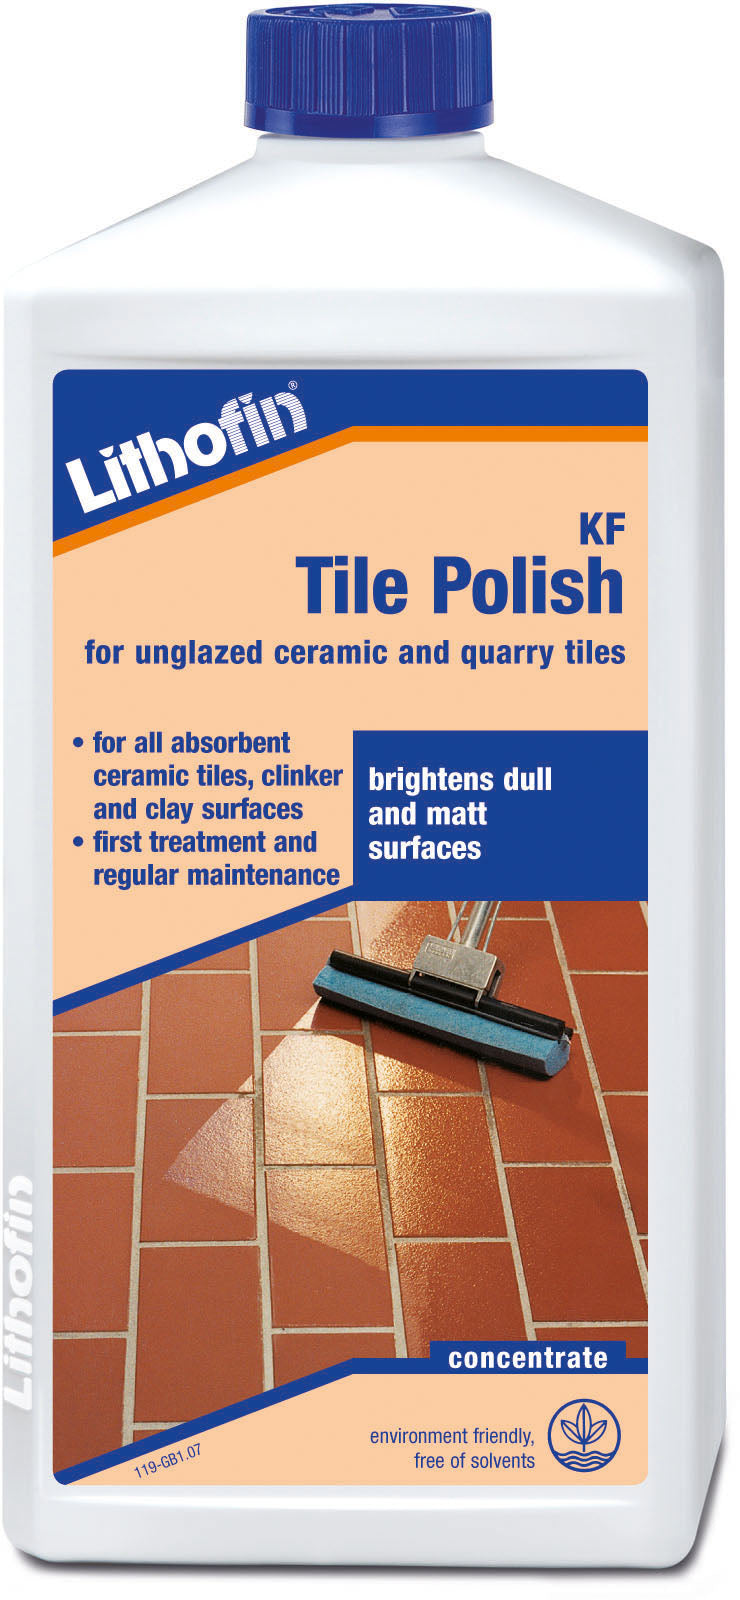 Lithofin Tile Polish brightens dull and matt surfaces. 